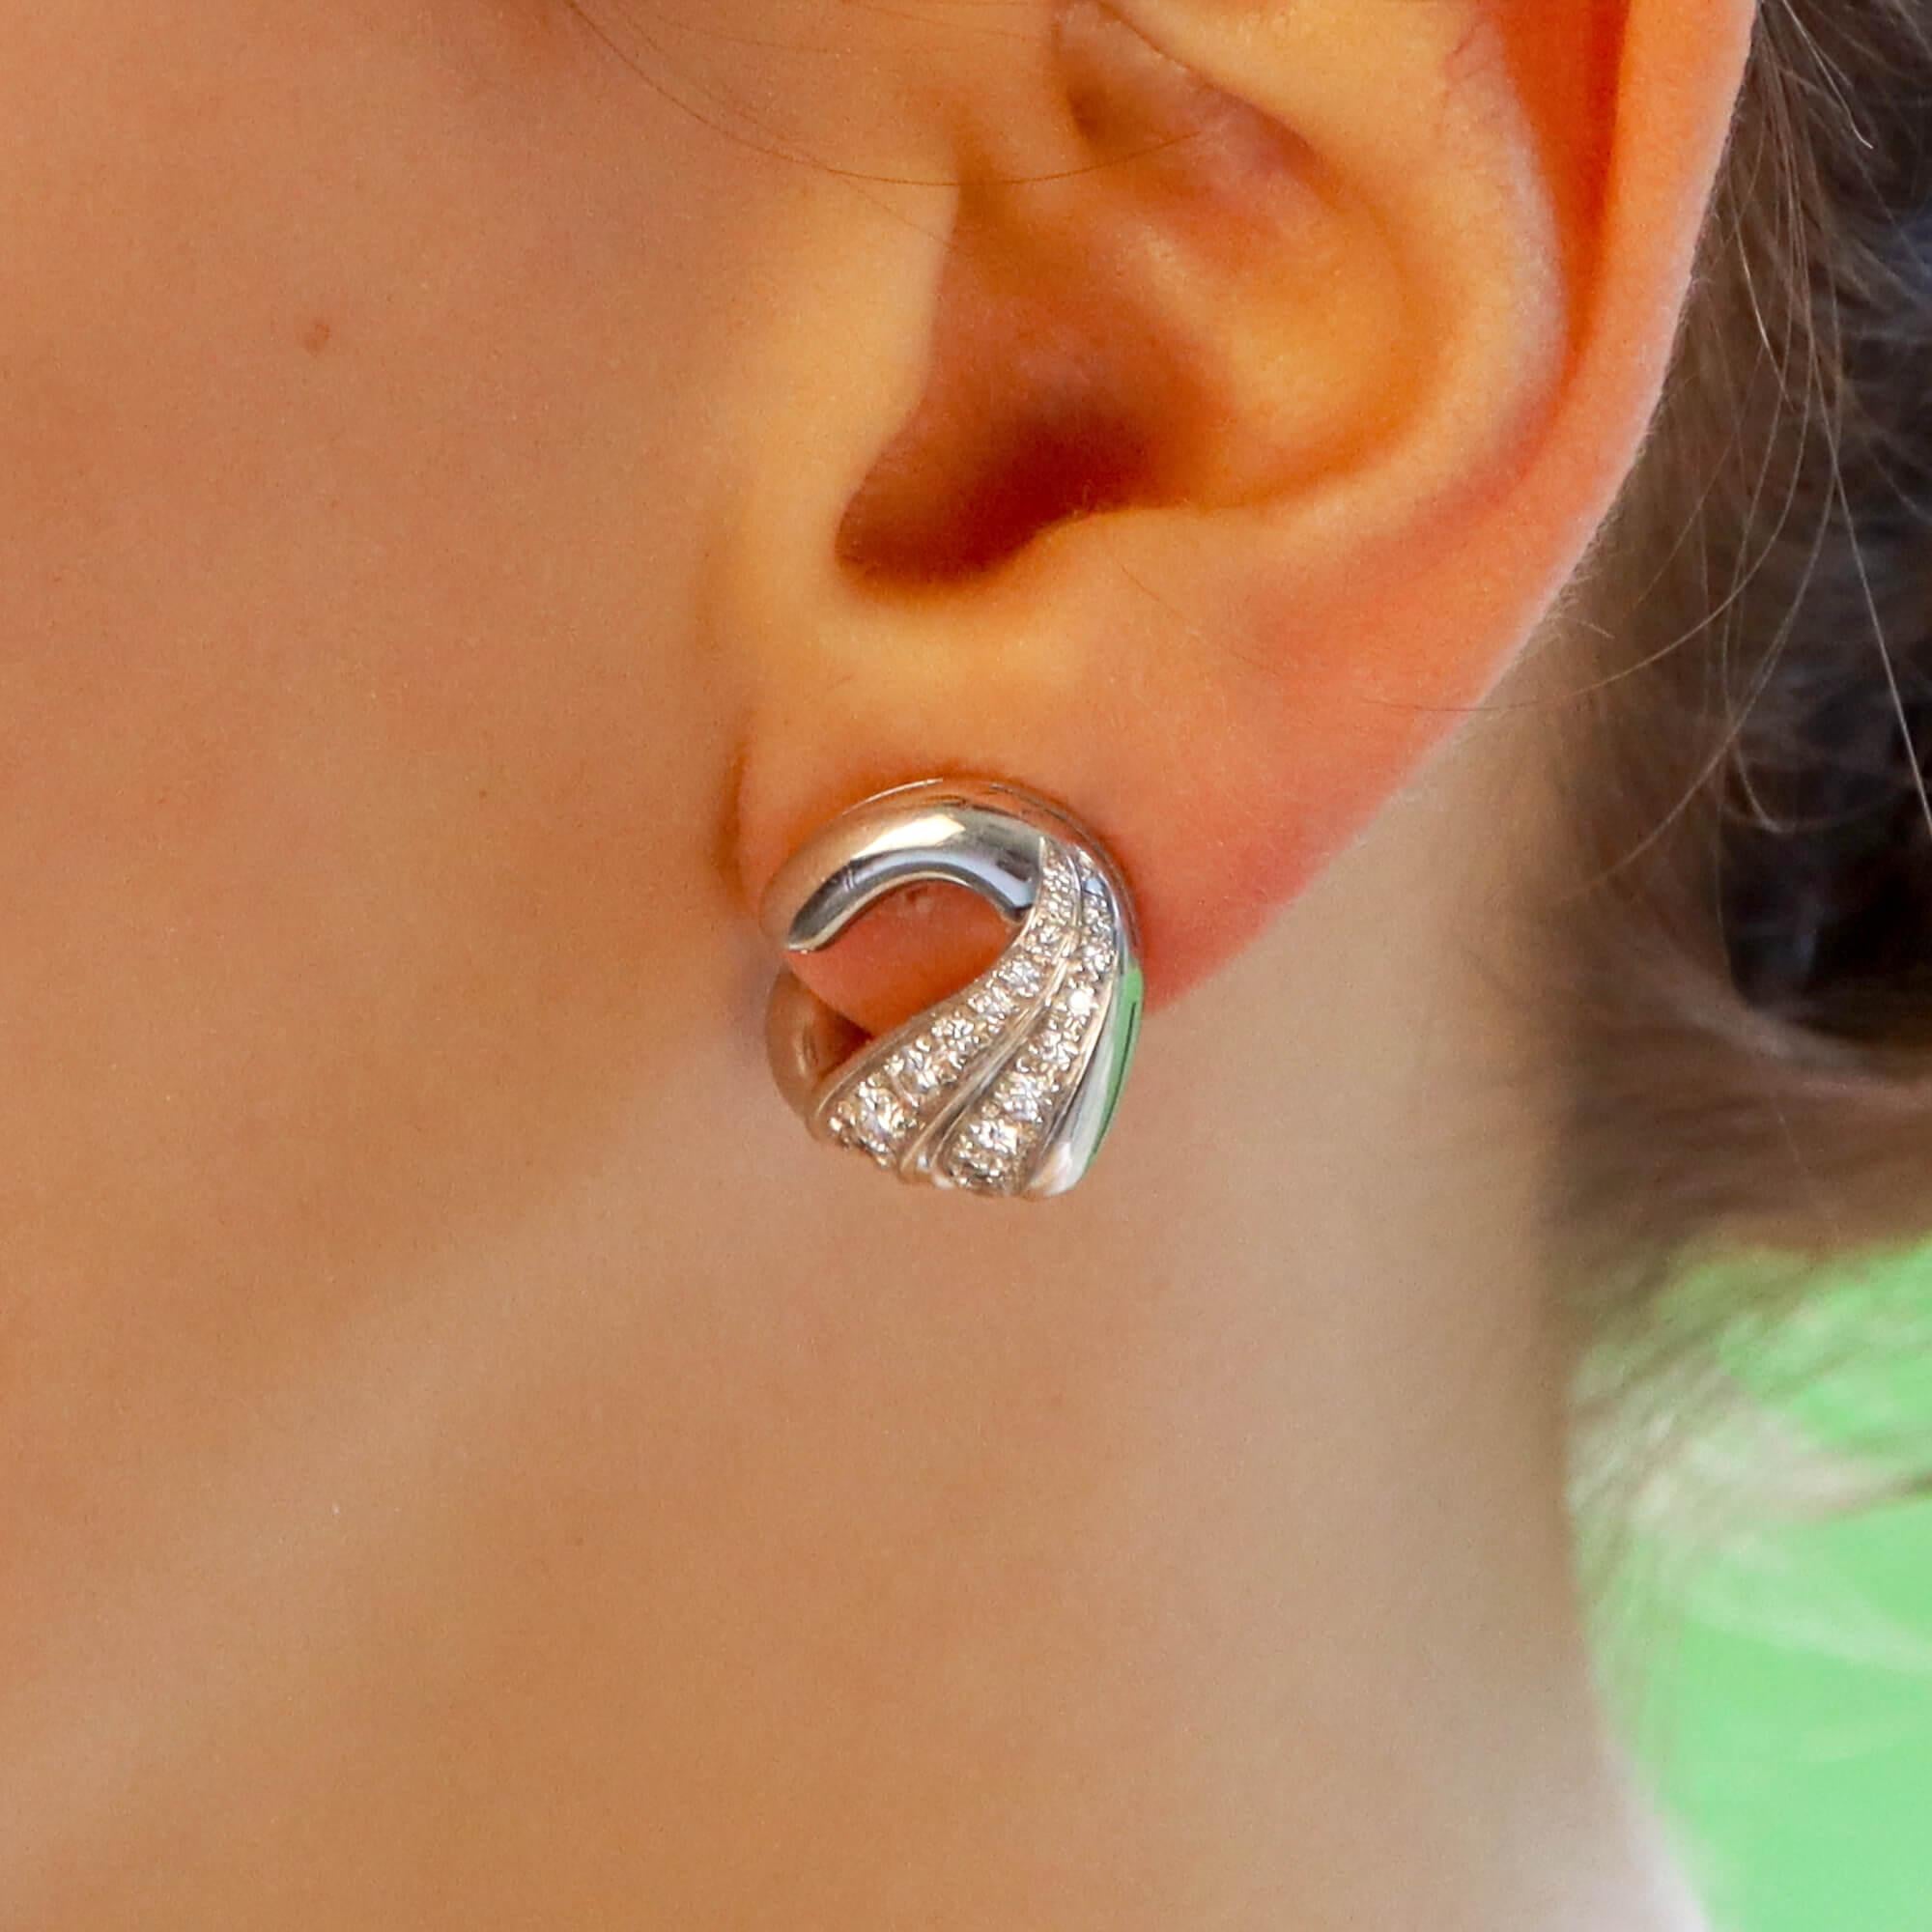 bvlgari clip earrings